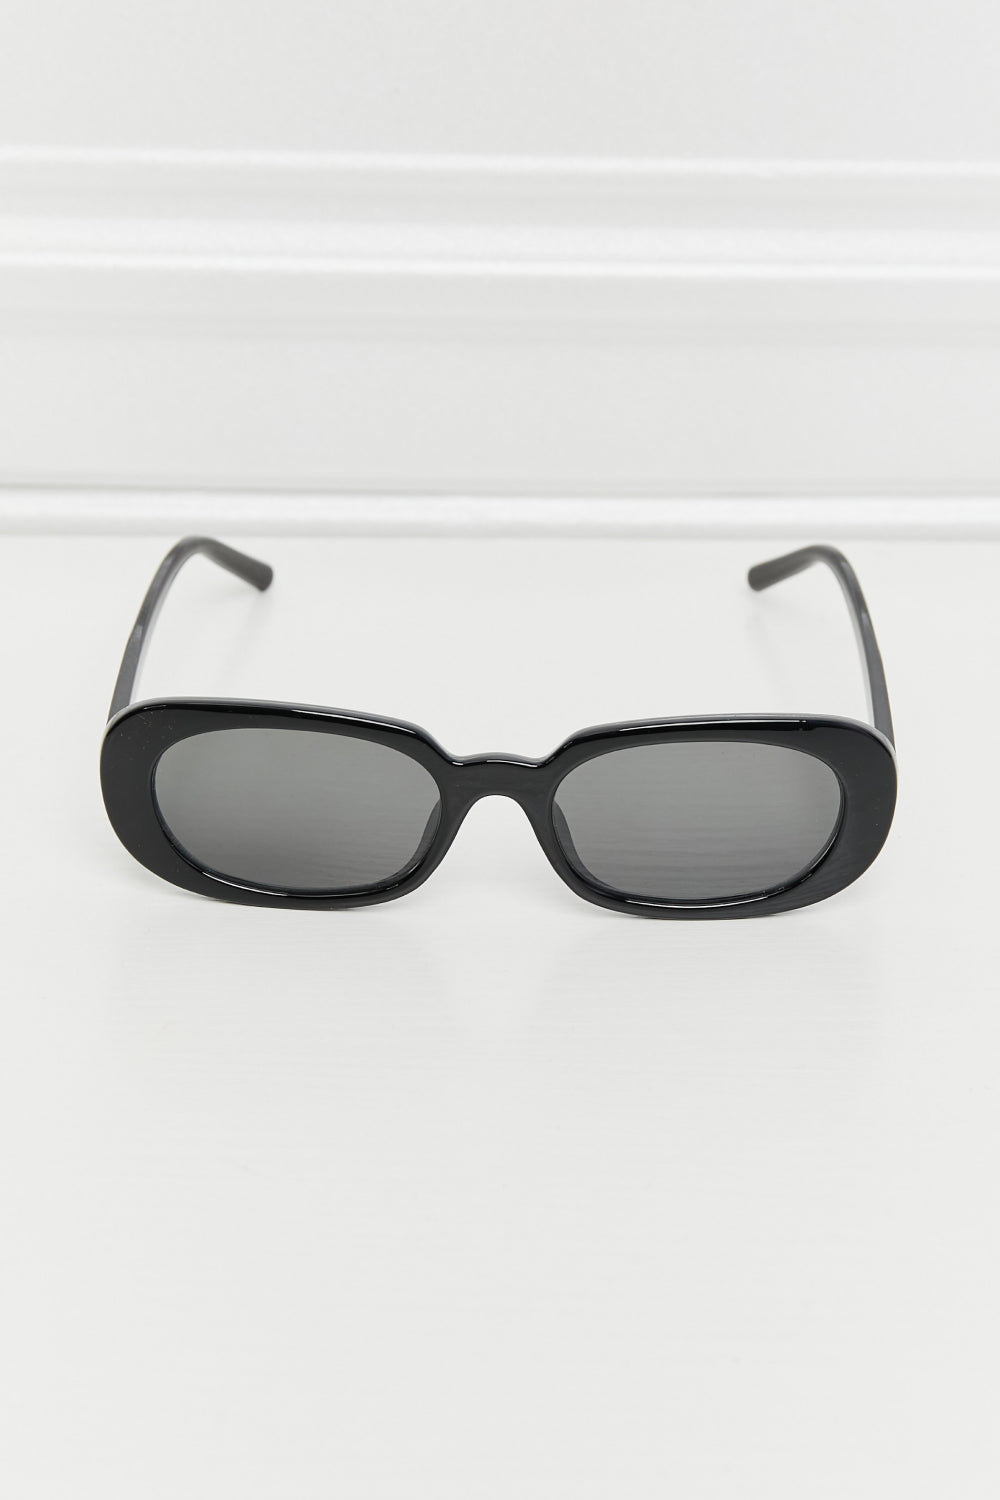 Uylee's Boutique Oval Full Rim Sunglasses